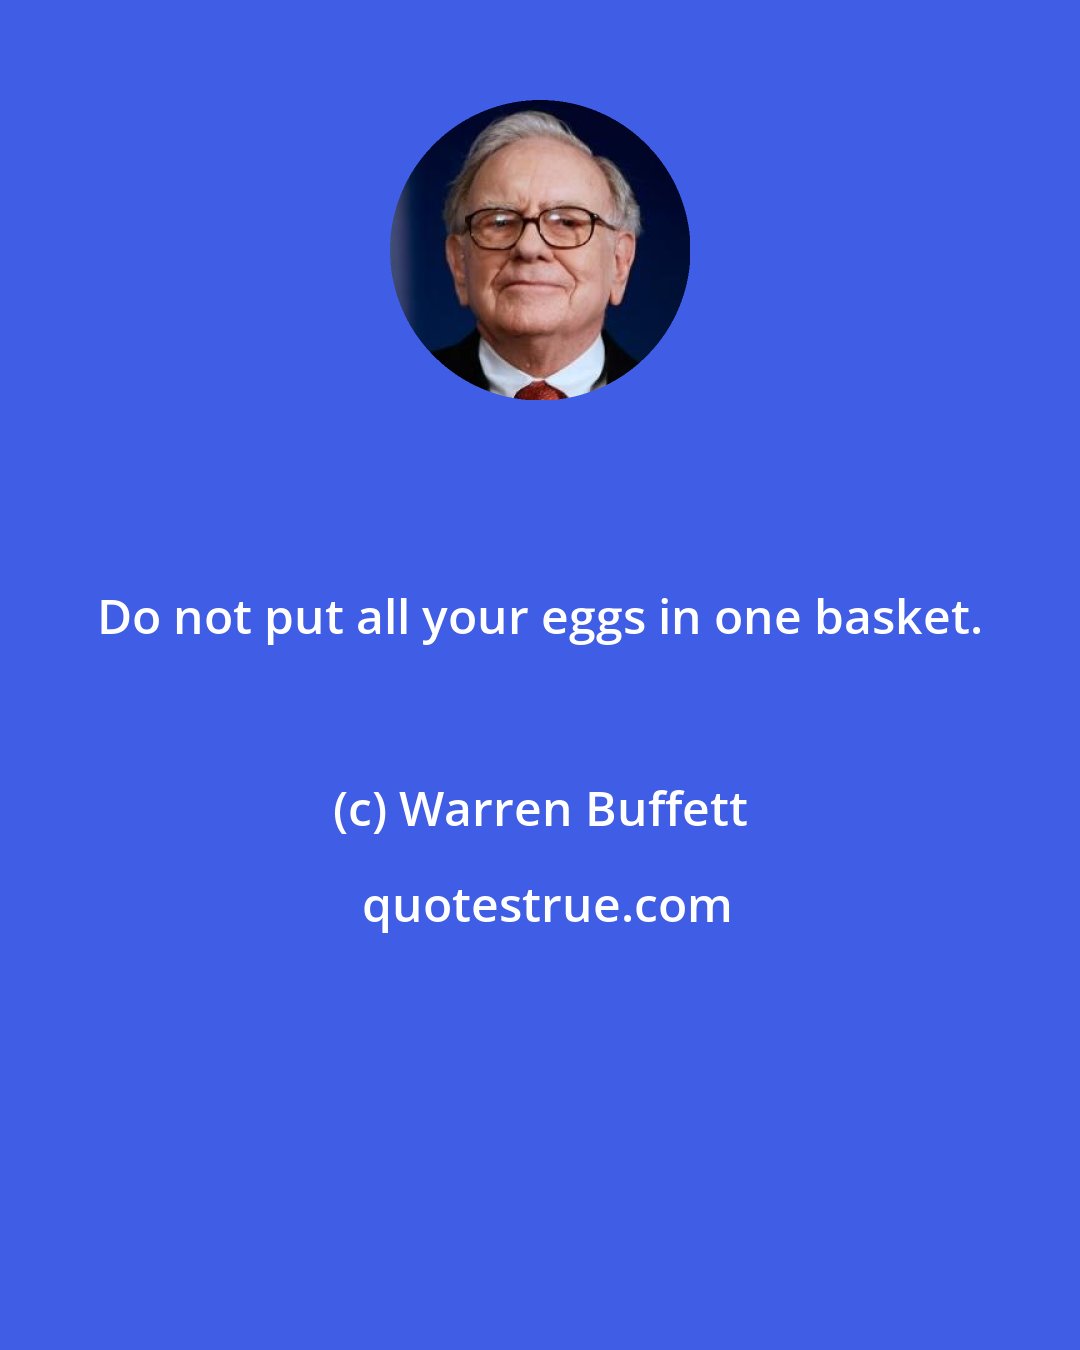 Warren Buffett: Do not put all your eggs in one basket.